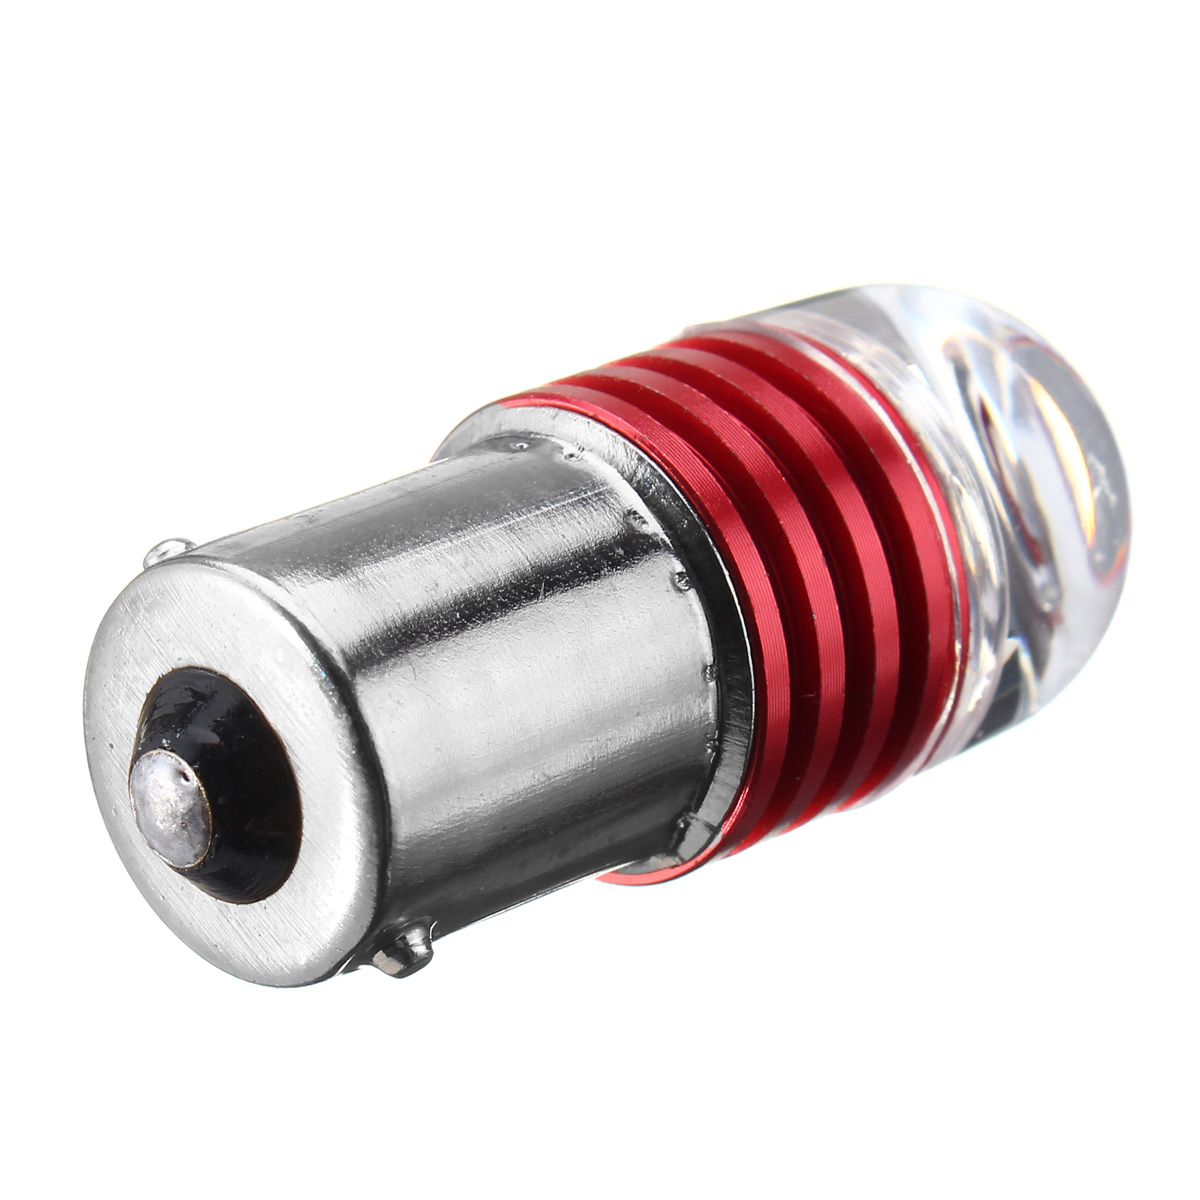 1156 1157 7443 3157 LED Car Reverse Brake Backup Light Turn Signal Bulb 1.6W 60LM Red Color - Auto GoShop